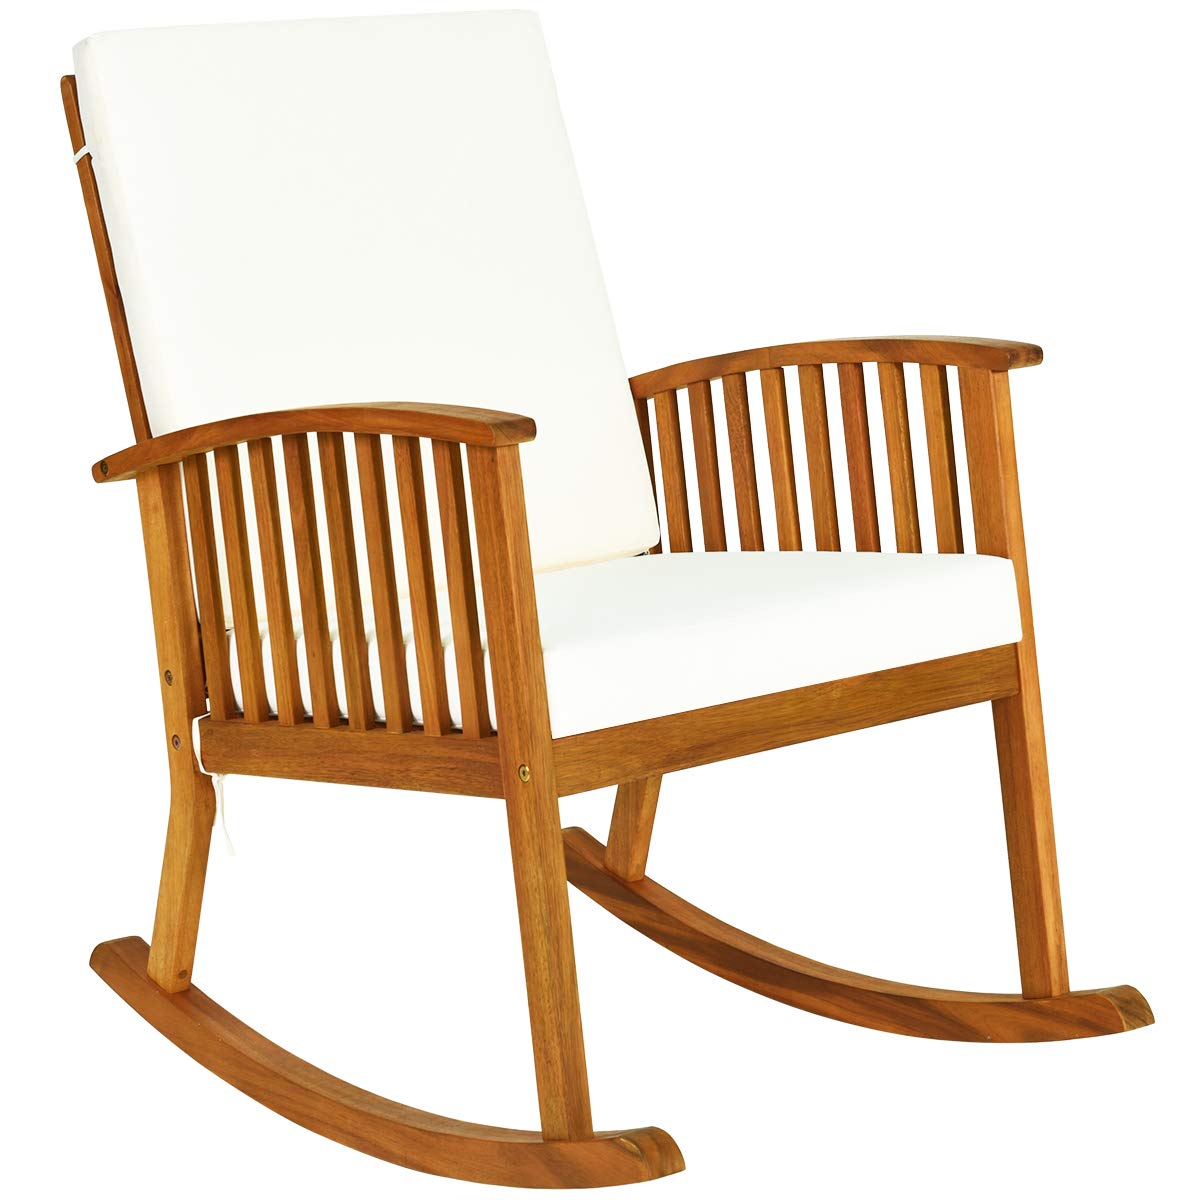 Tangkula Outdoor Acacia Wood Rocking Chair, Wooden Rocker w/Detachable Washable Cushions